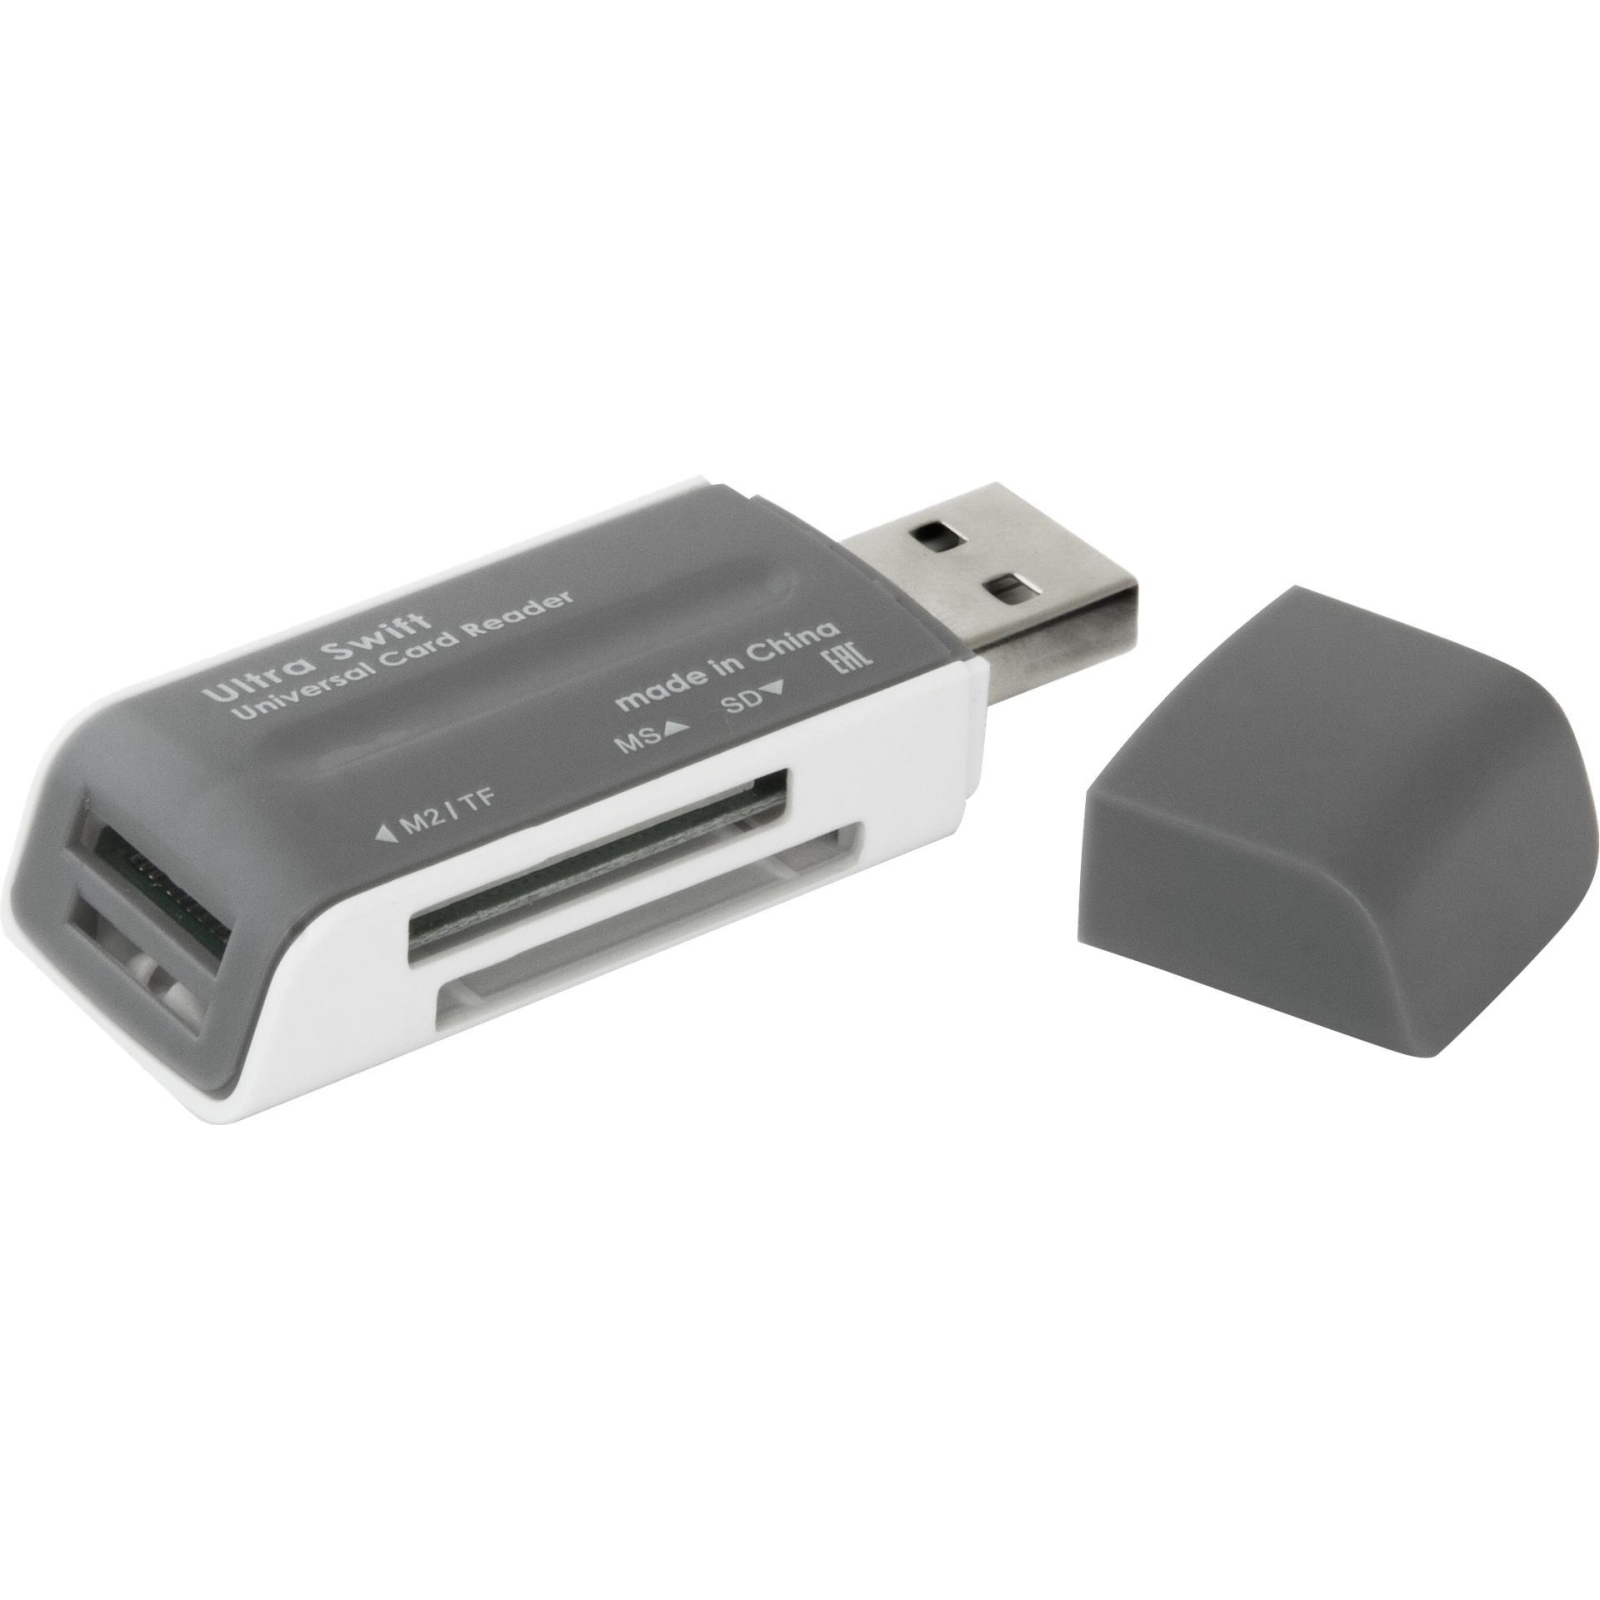 Зчитувач флеш-карт Defender Ultra Swift USB 2.0 (83260) зображення 2